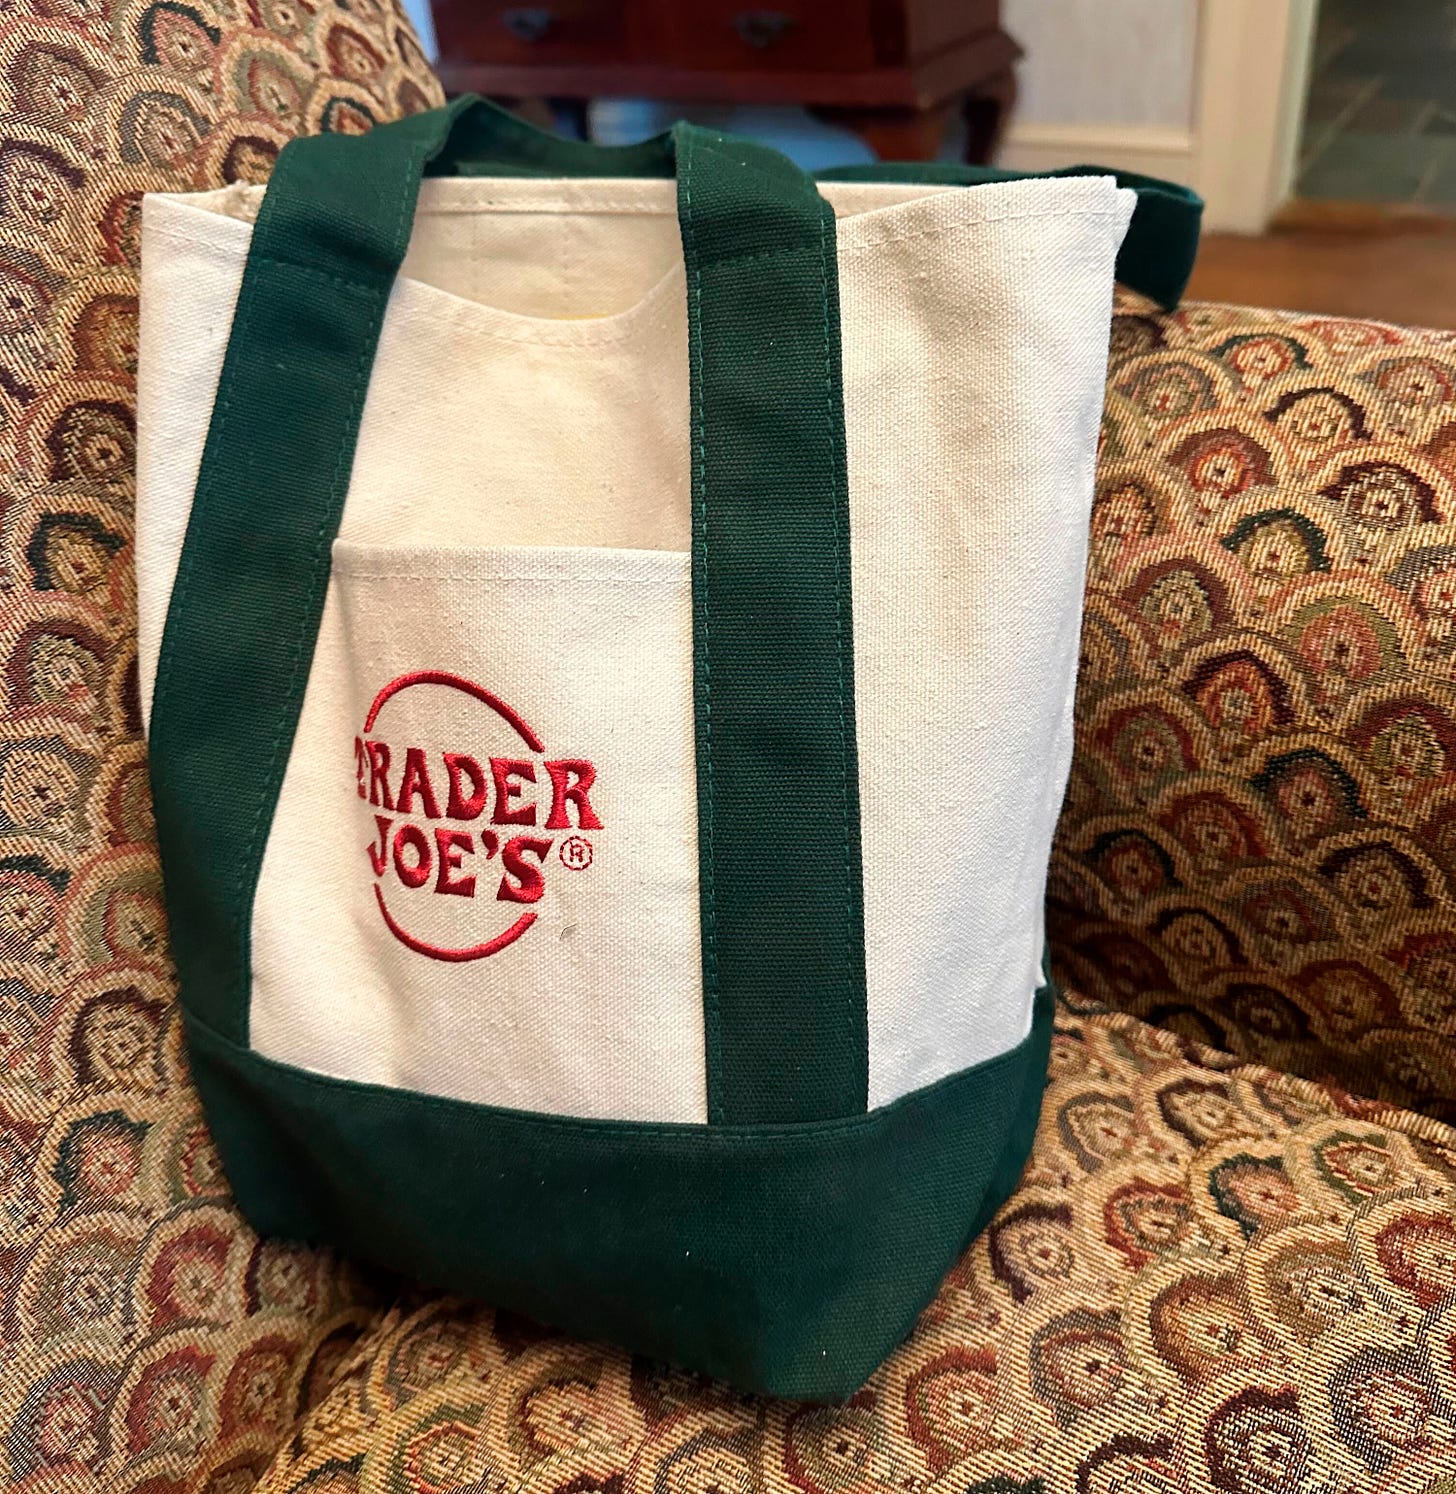 A Trader Joe's mini tote bag.